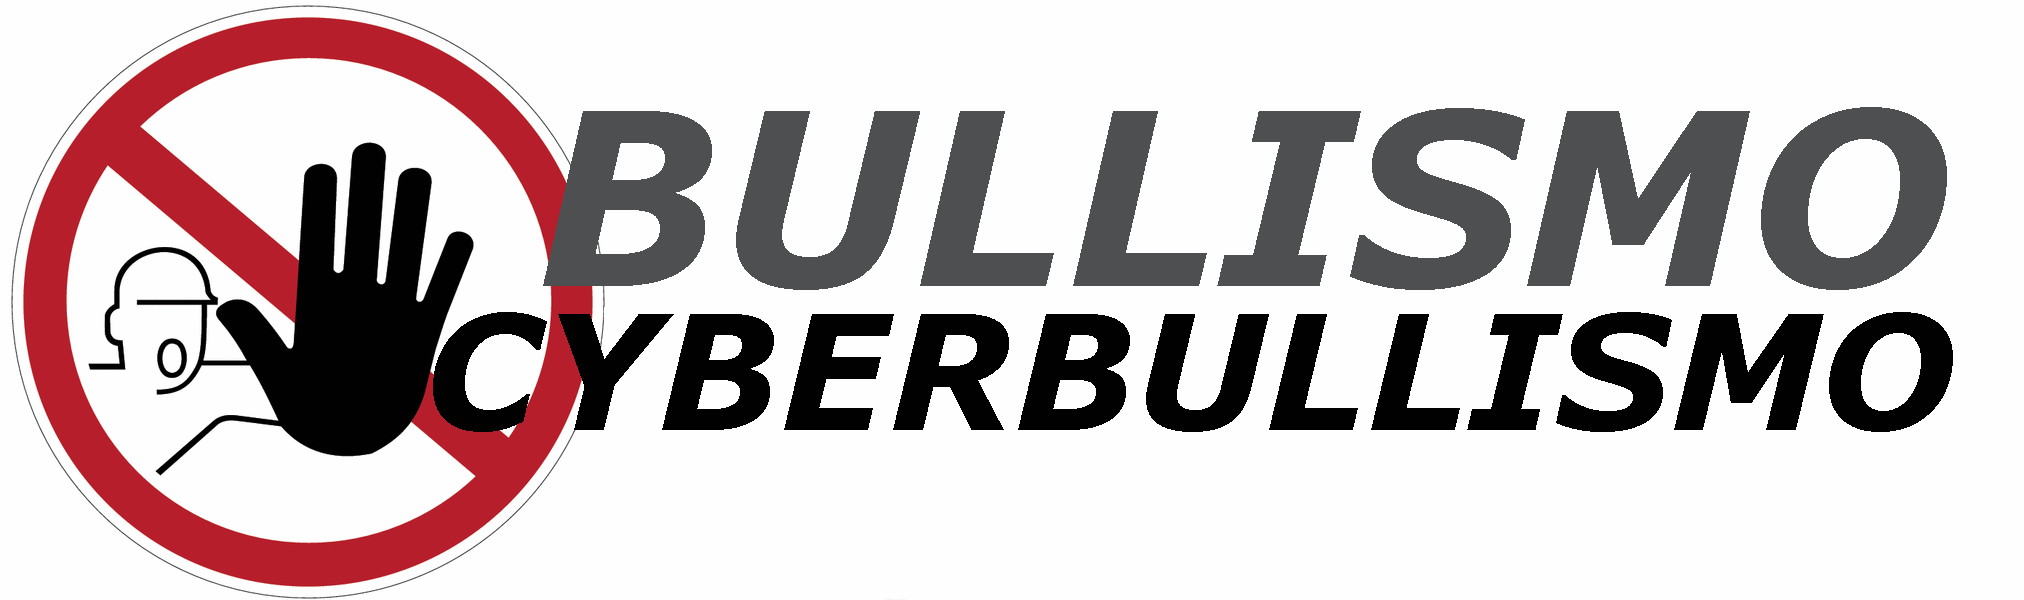 bully banner